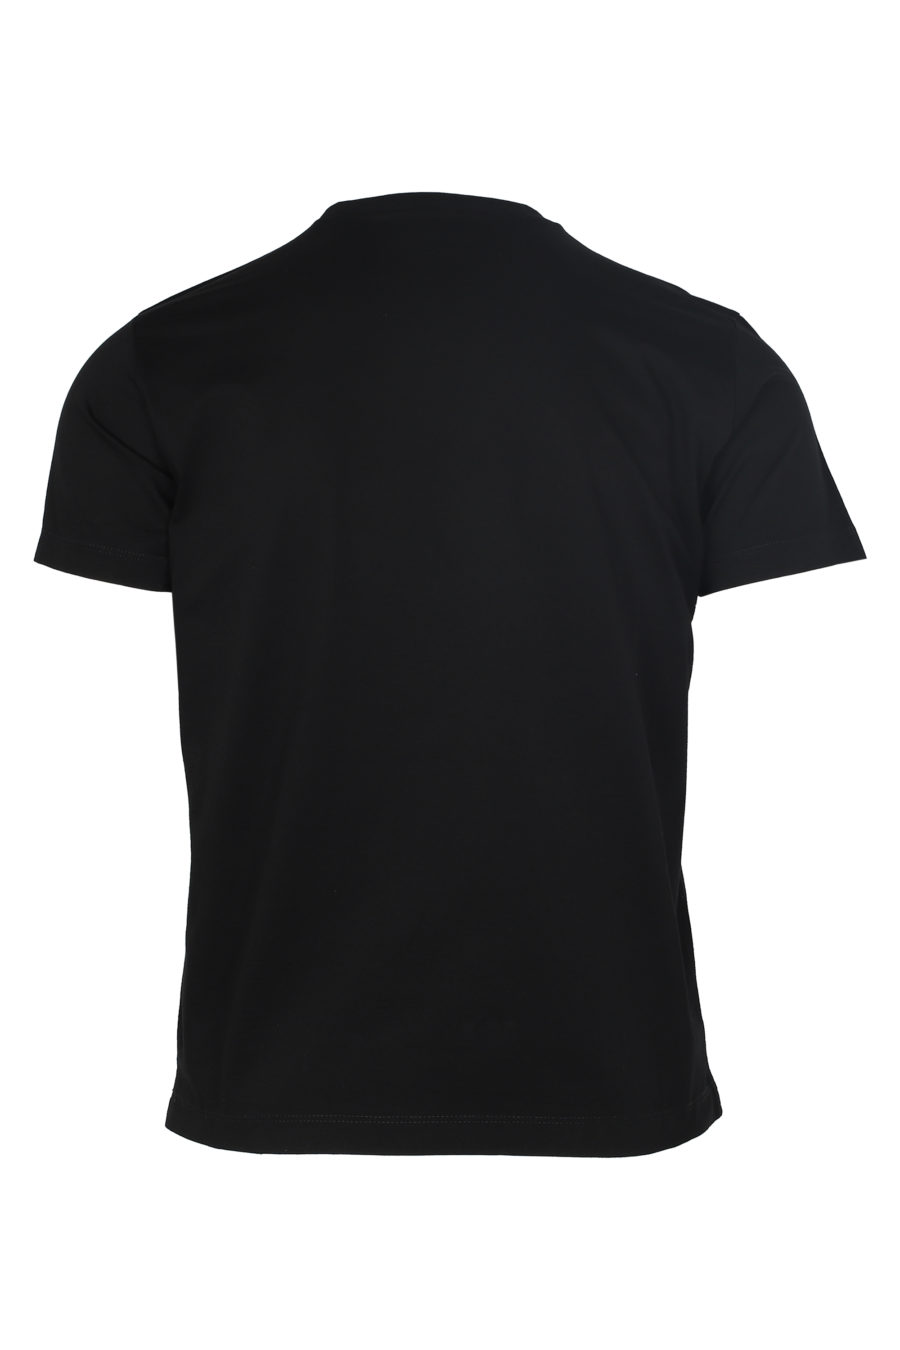 Camiseta negra con logo dibujado - IMG 6017